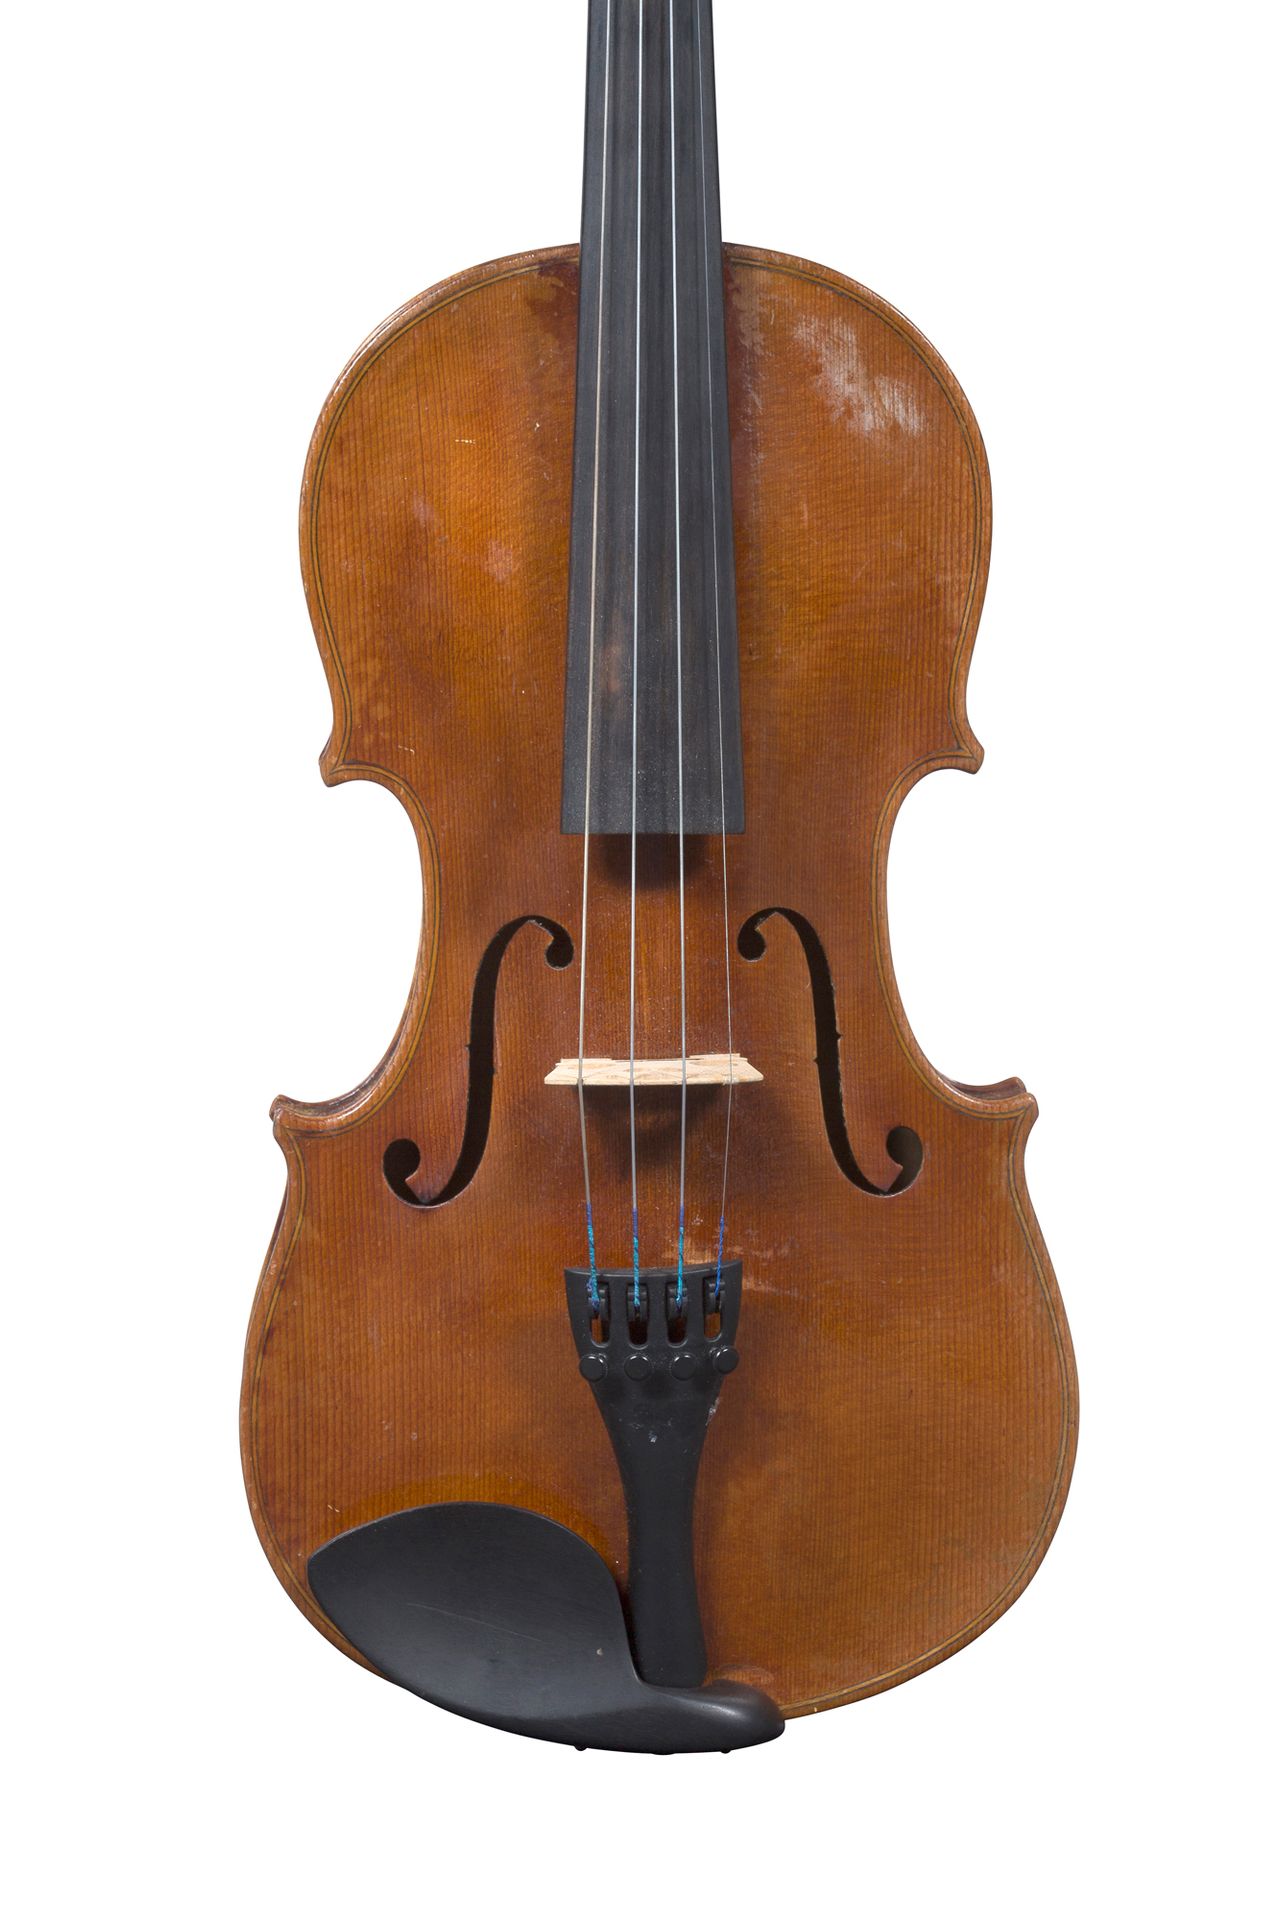 Null A German Violin, circa 1900-20